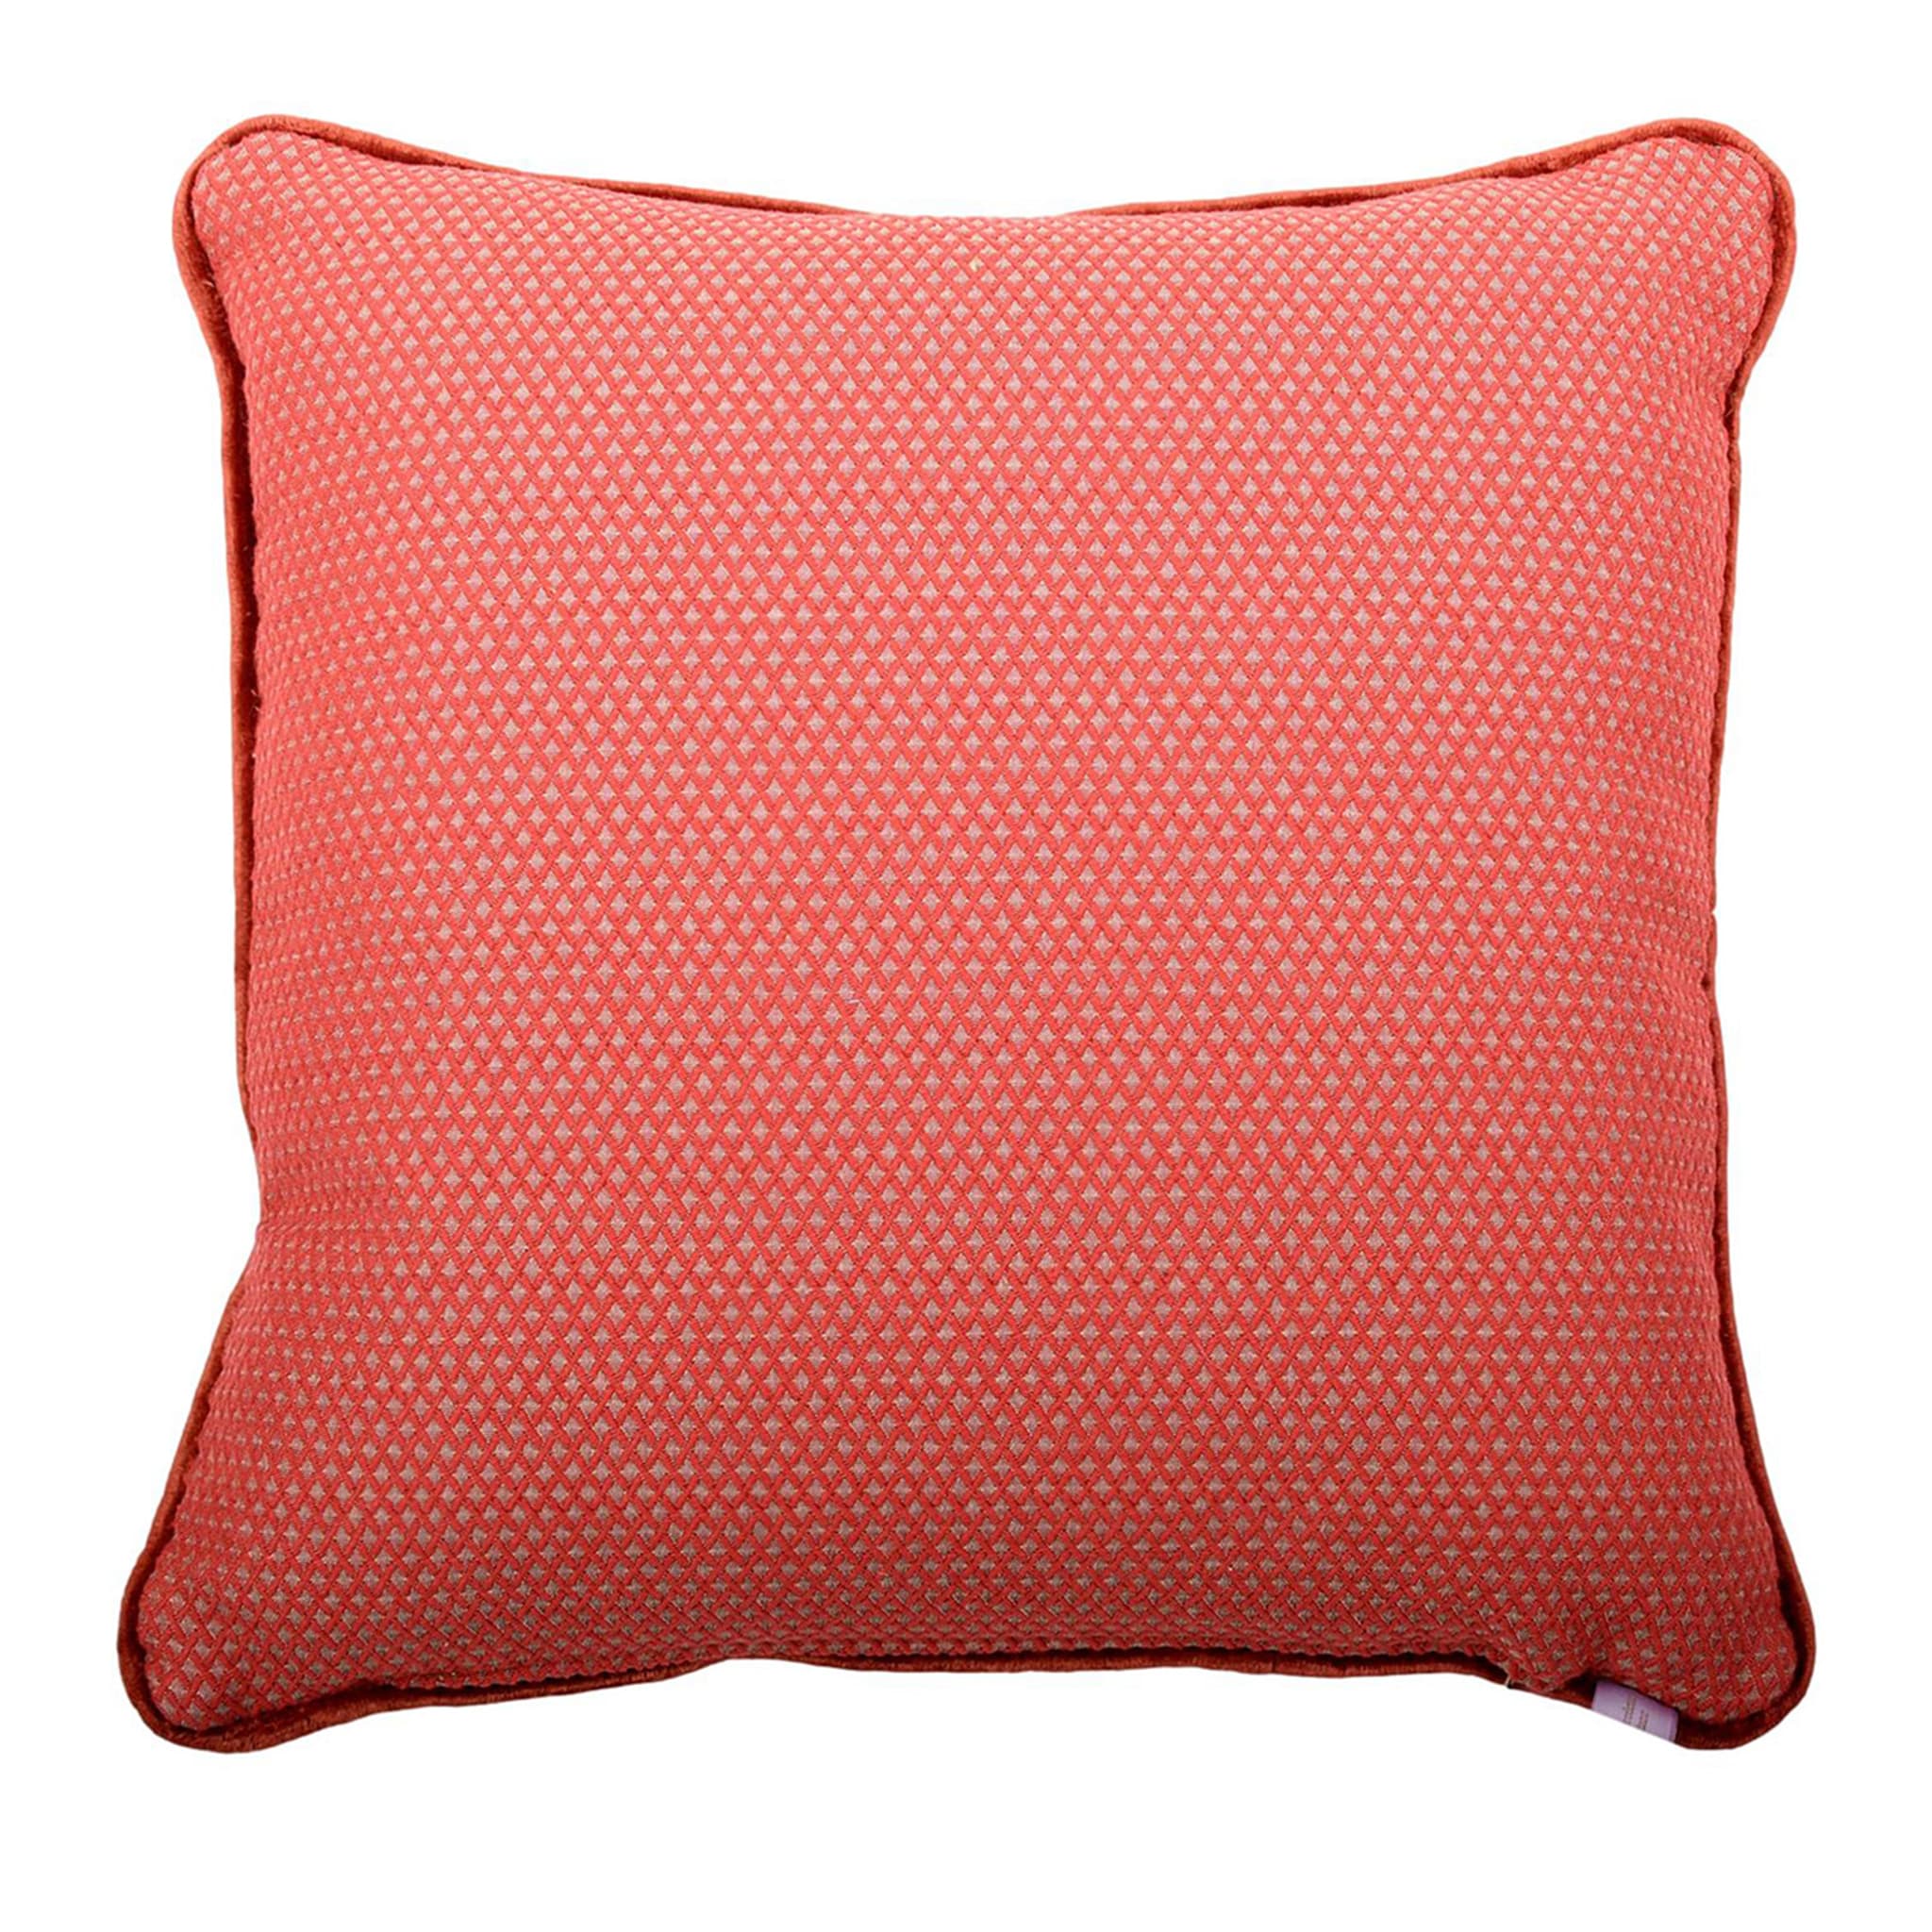 Carrè Cushion in False Unit Jacquard Fabric and Linen Velvet - Main view